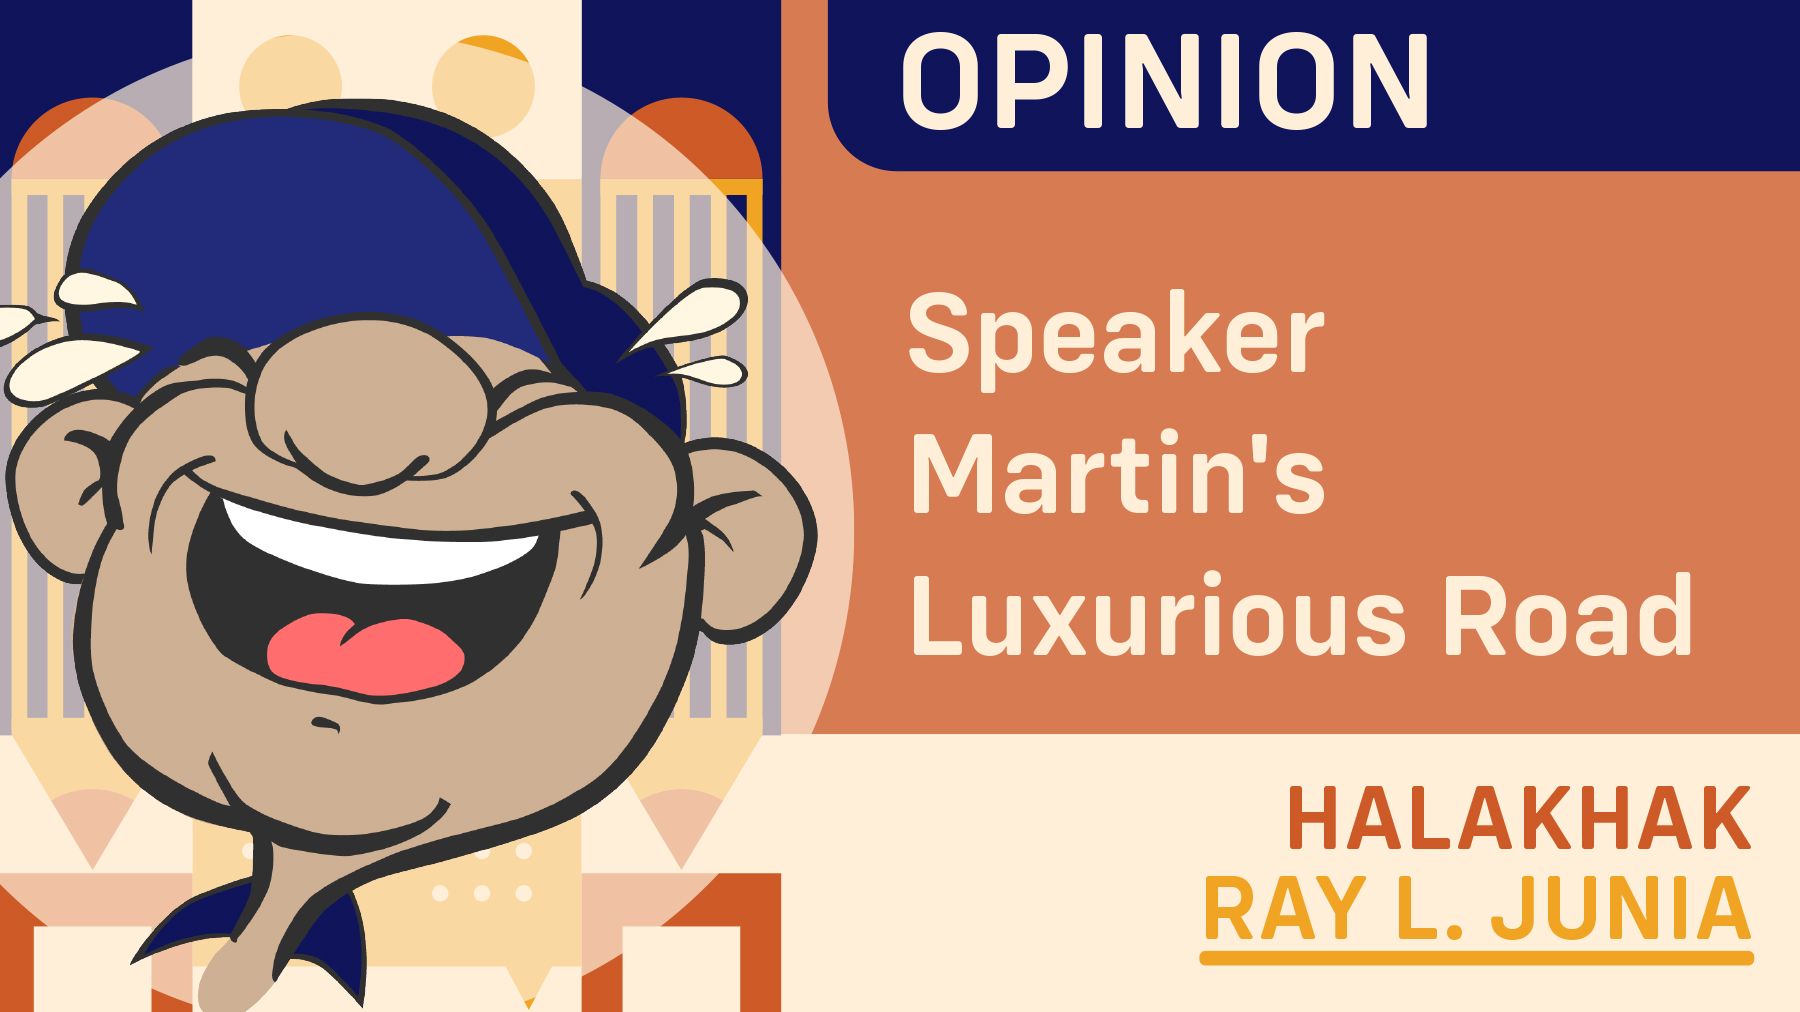 Speaker Martin's Luxurious Road